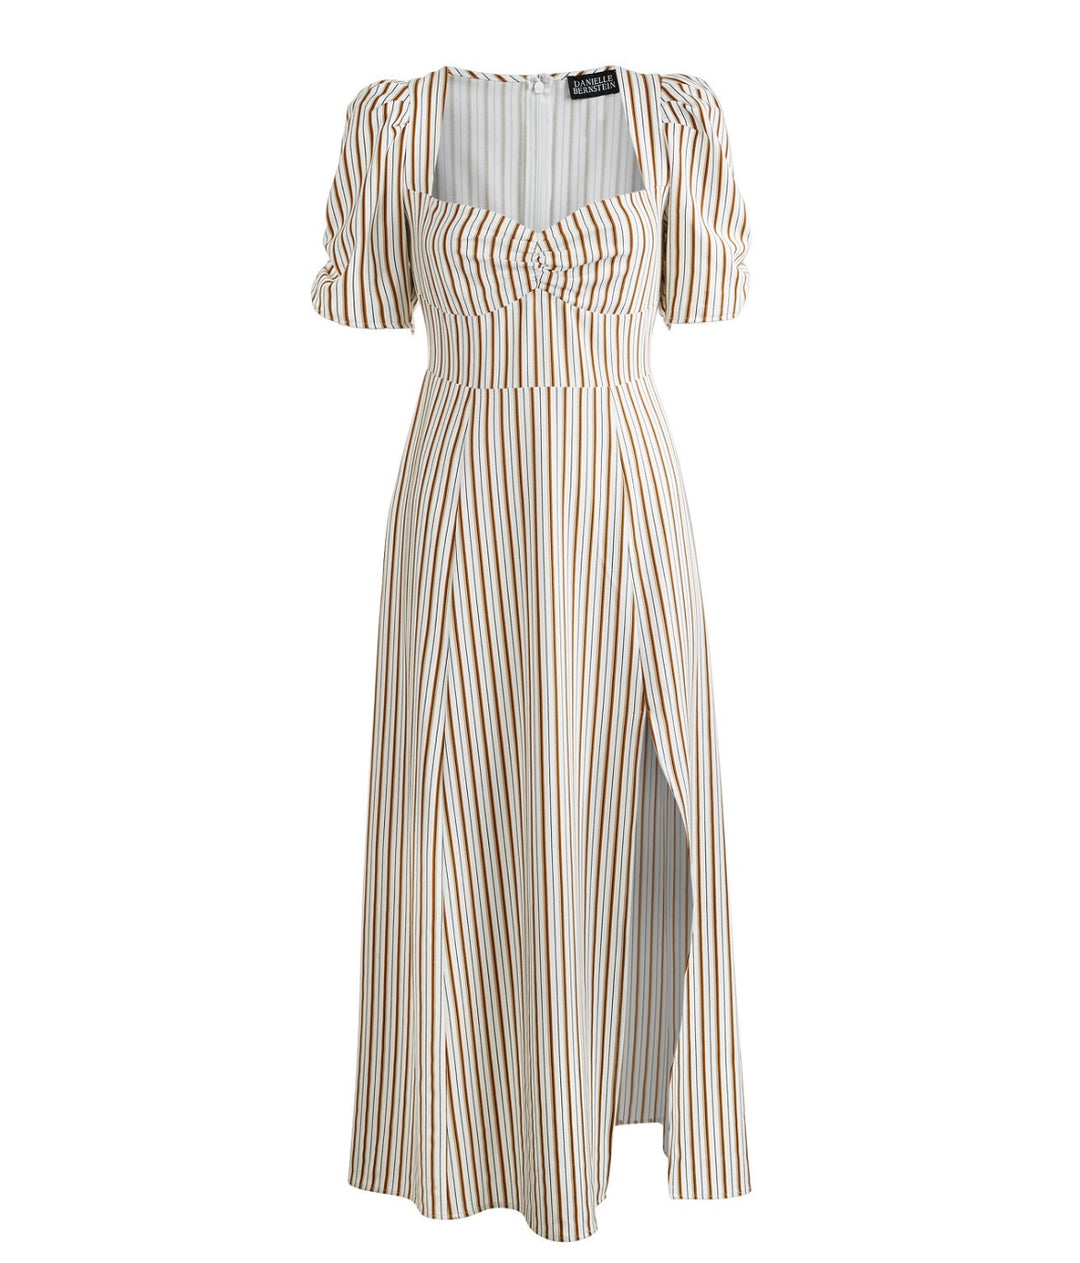 Danielle Bernstein Women's Striped Queen Anne Neckline Tea-Length Shift Dress